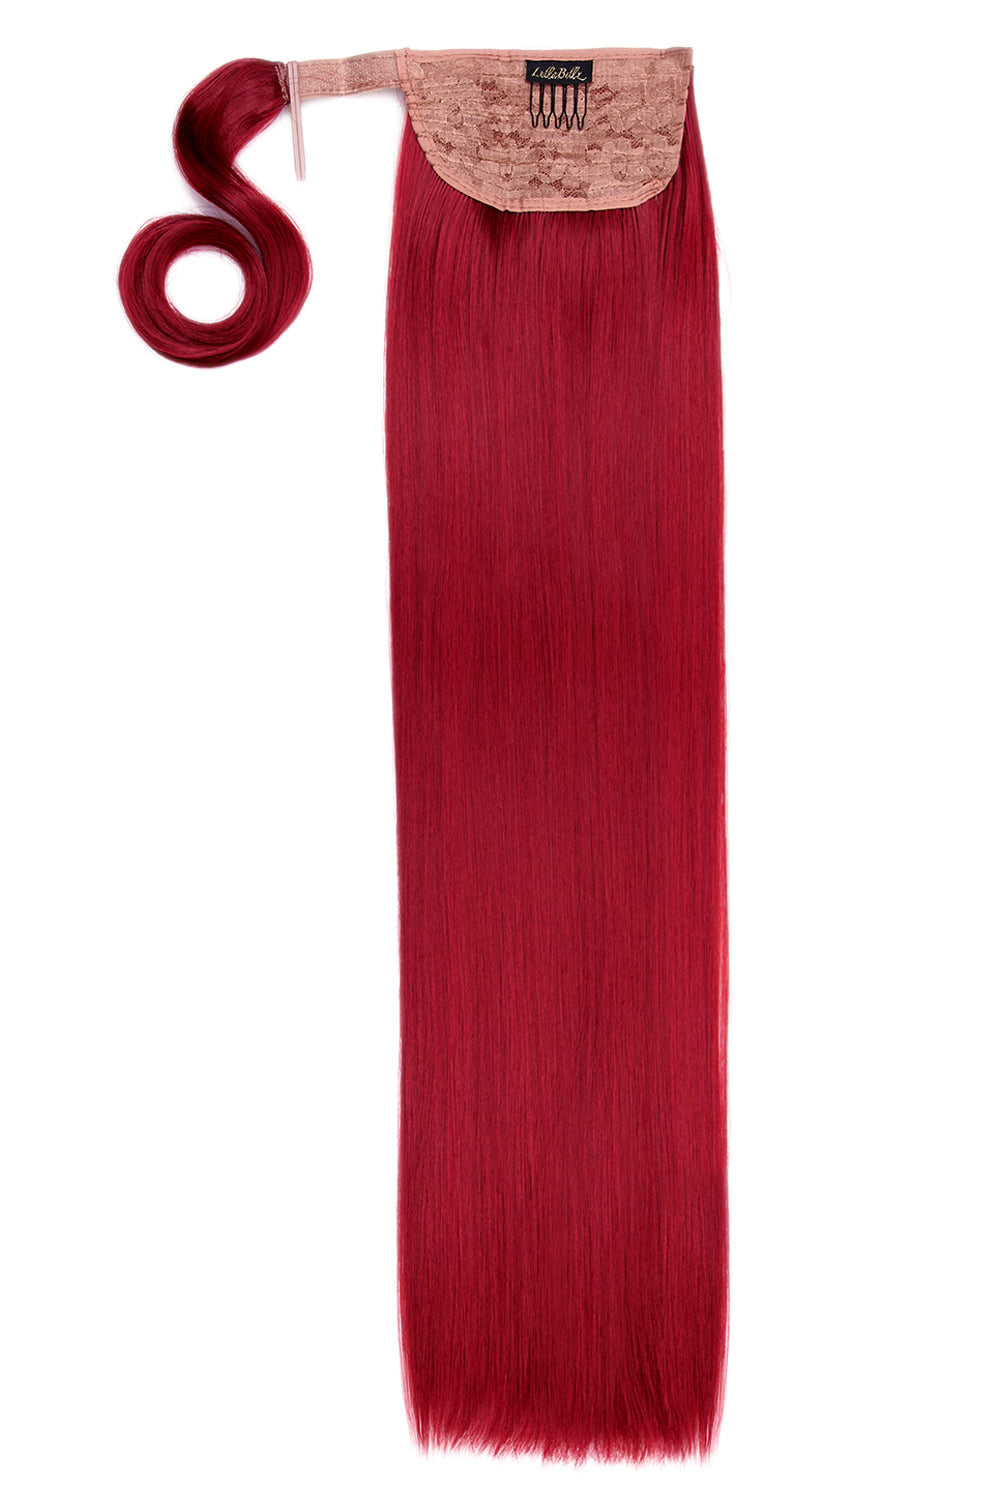 Grande Lengths 26" Straight Wraparound Ponytail - Ruby Red